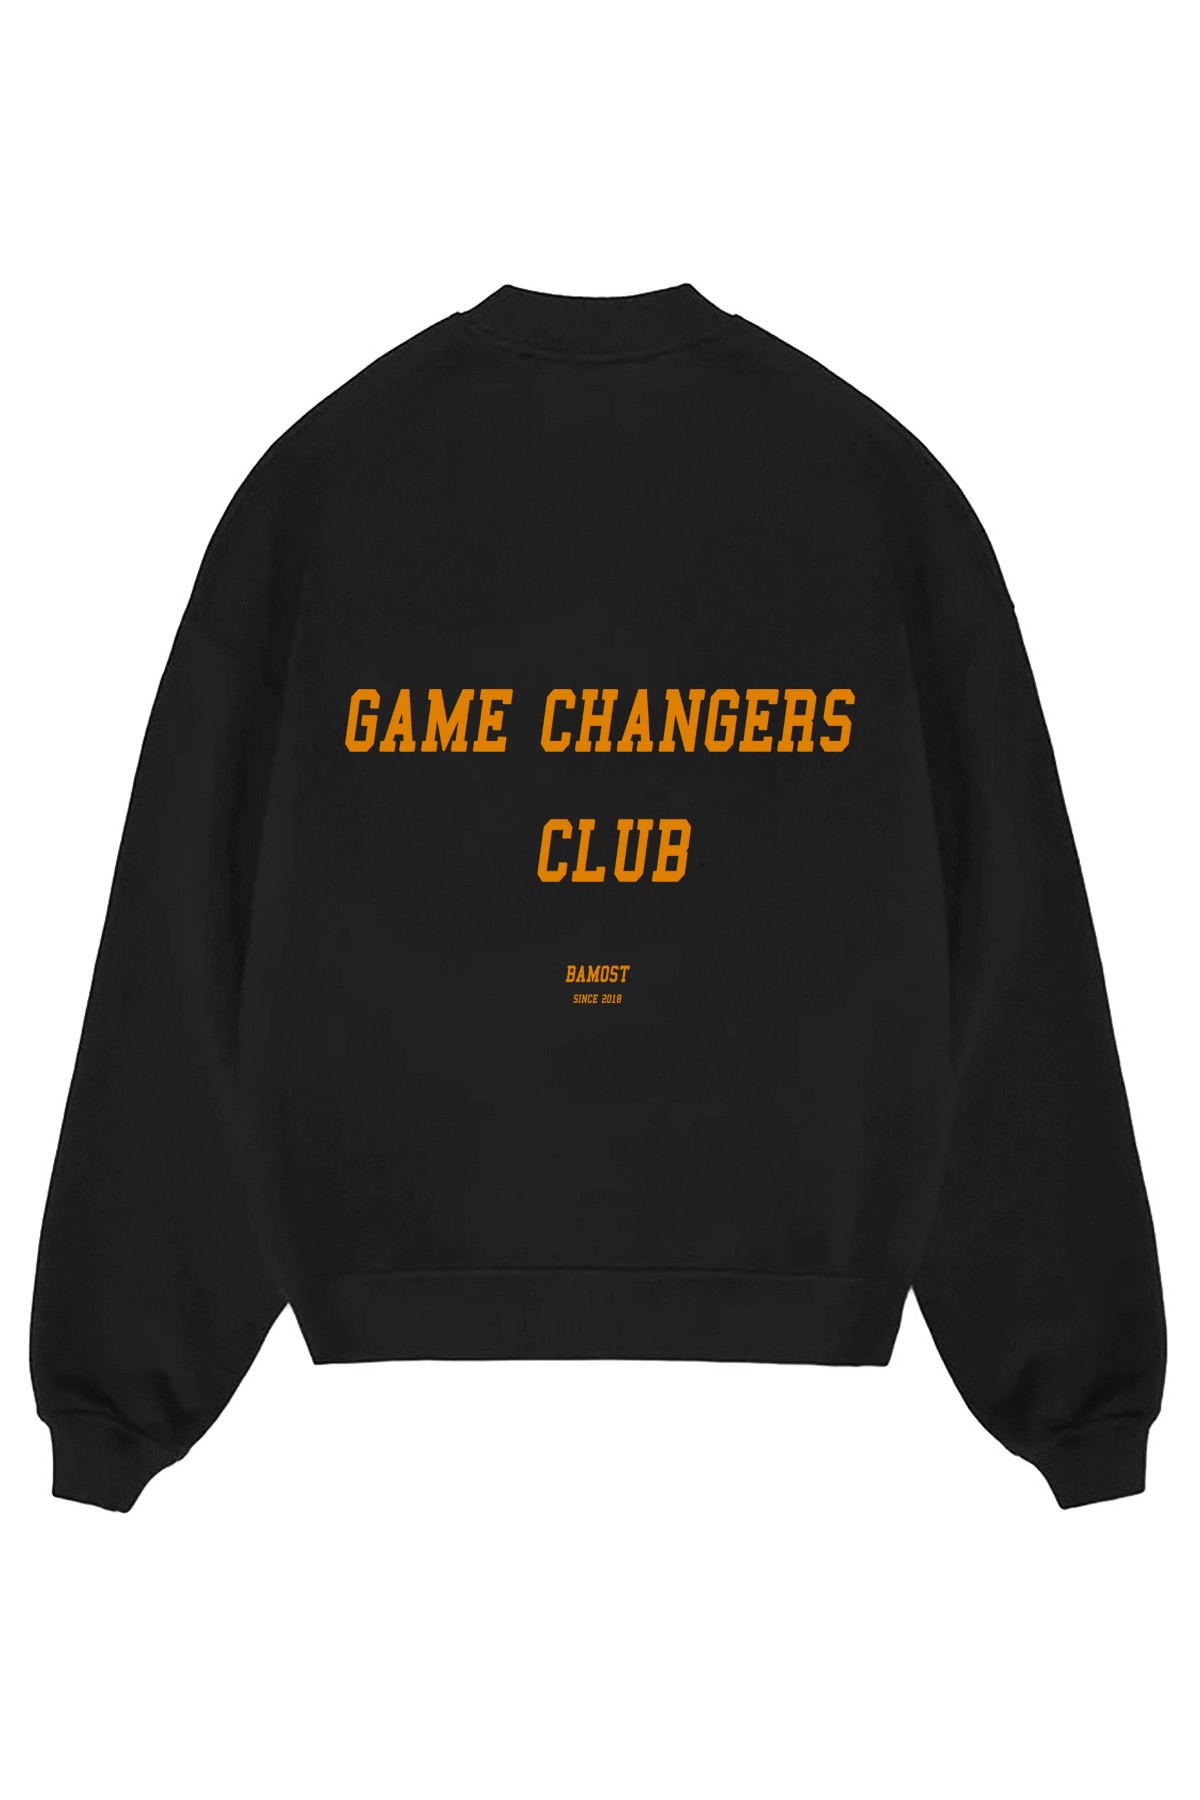 Club - Oversize Sweatshirt - BLACK